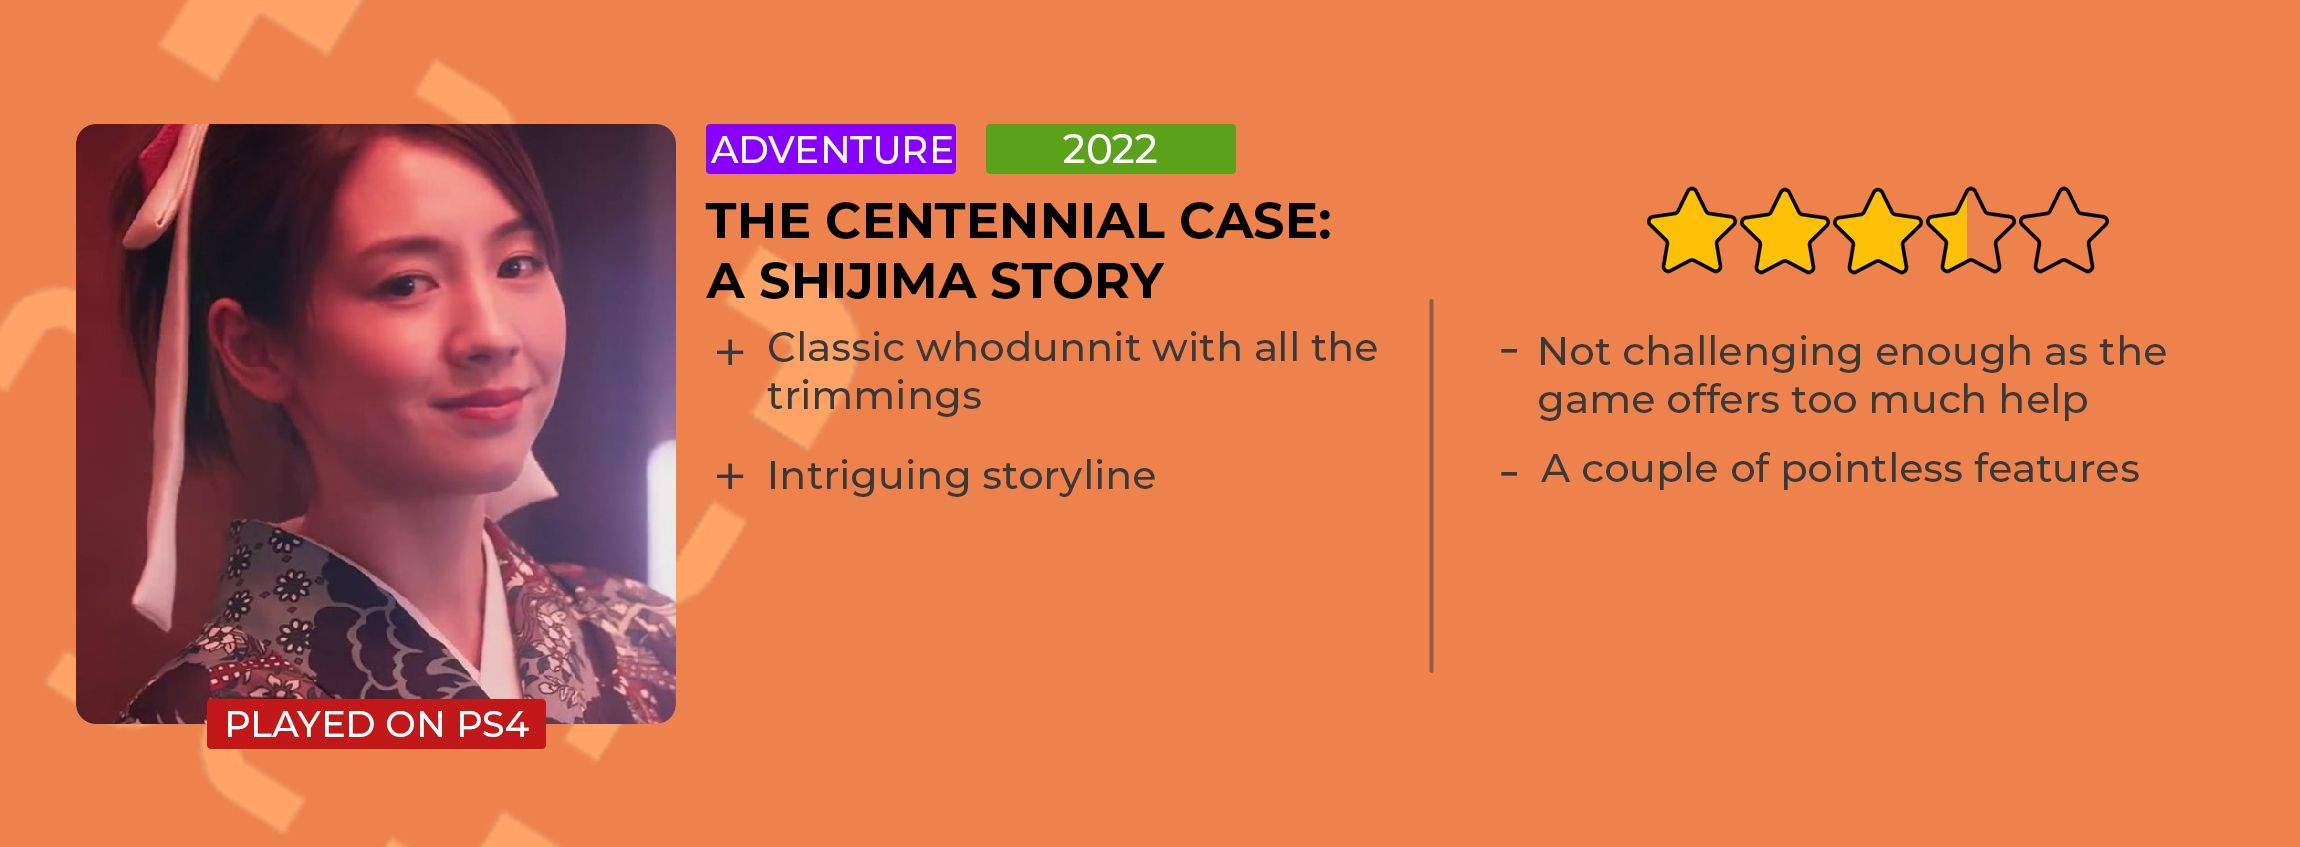 The Centennial Case - A Shijima Story Review Card